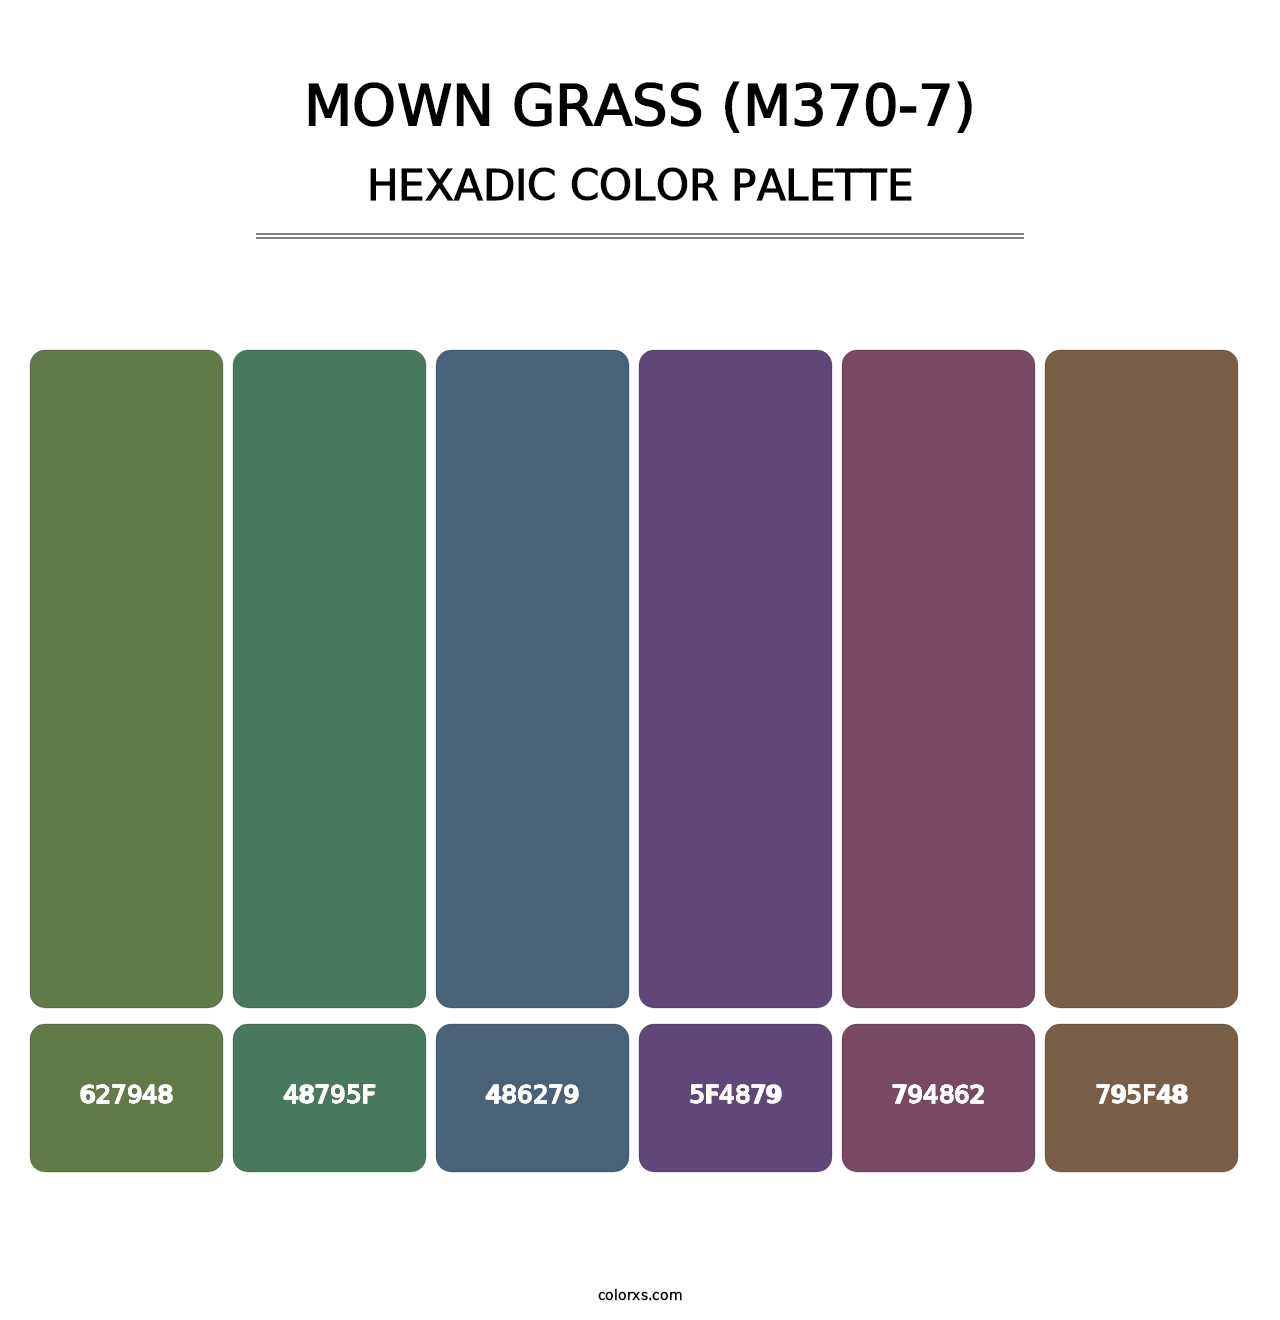 Mown Grass (M370-7) - Hexadic Color Palette